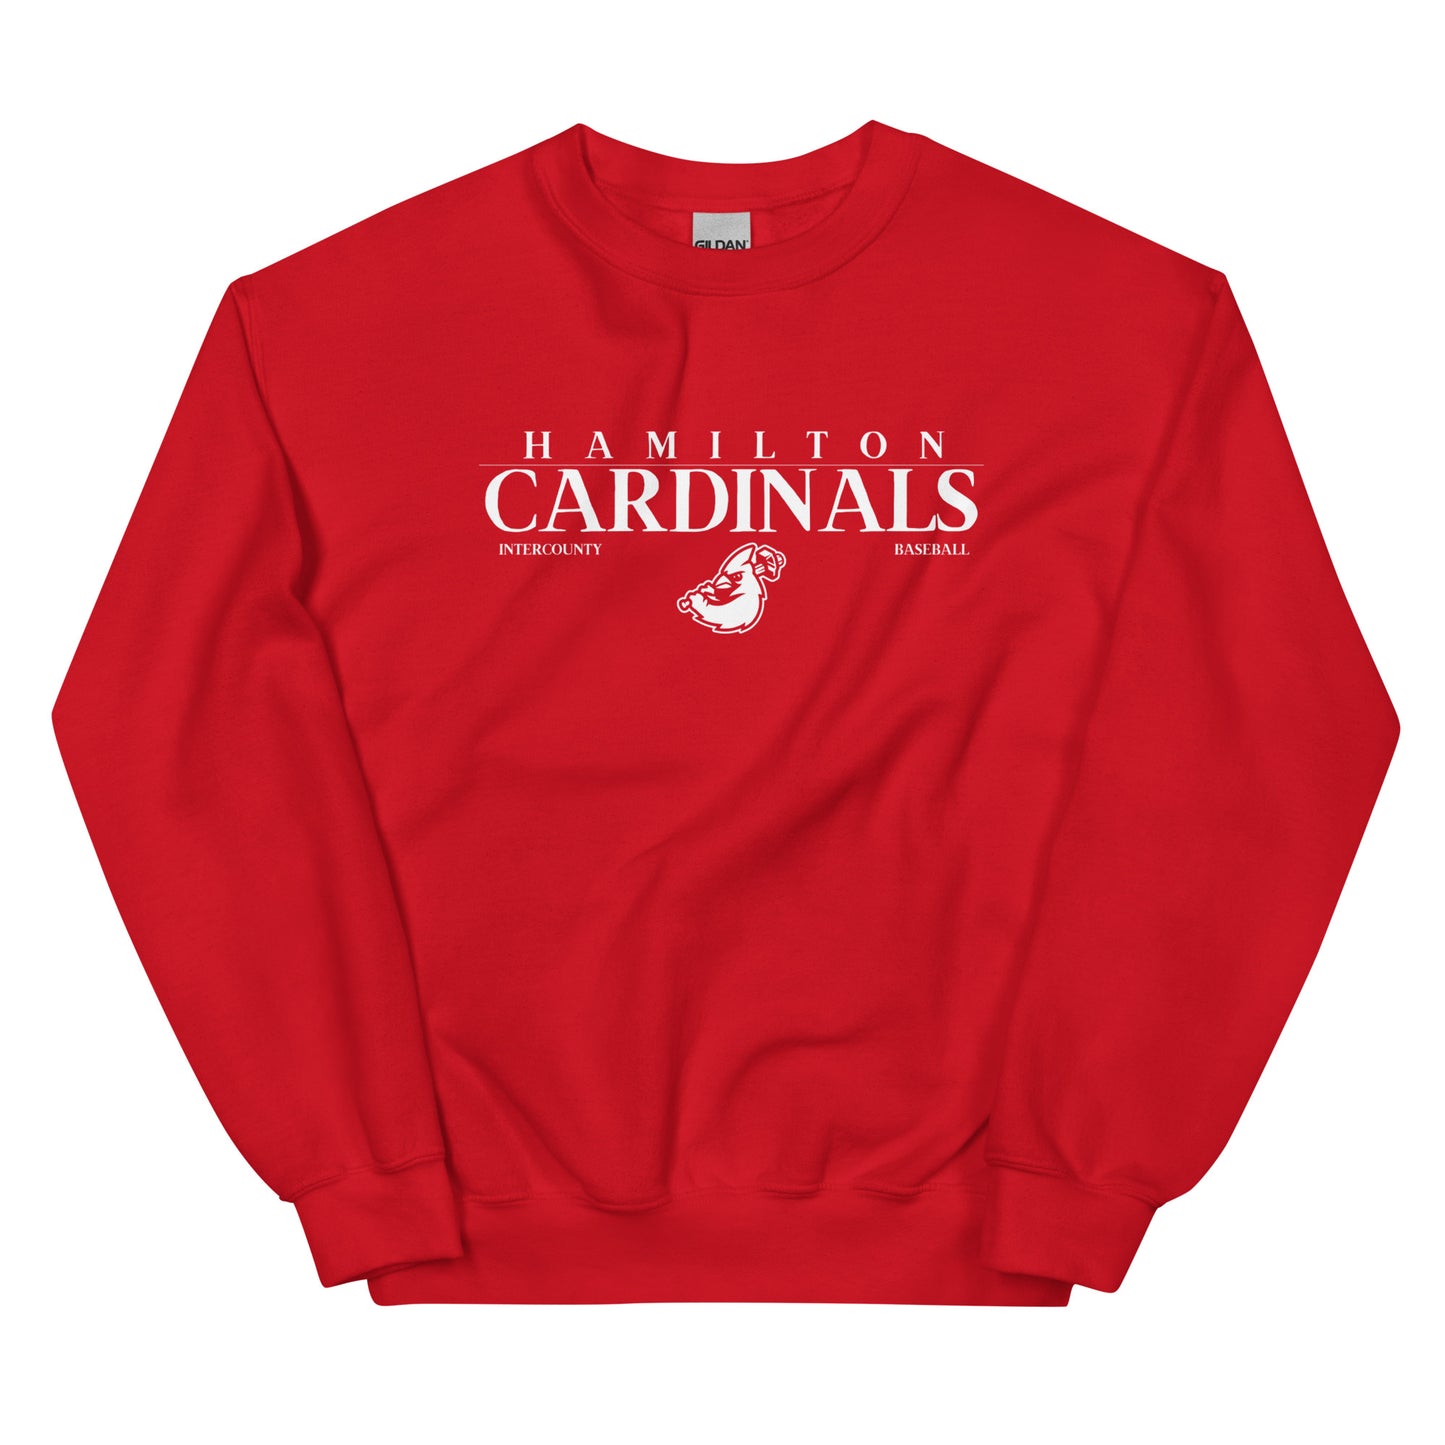 Hamilton Cardinals 90s Style Sweatshirt